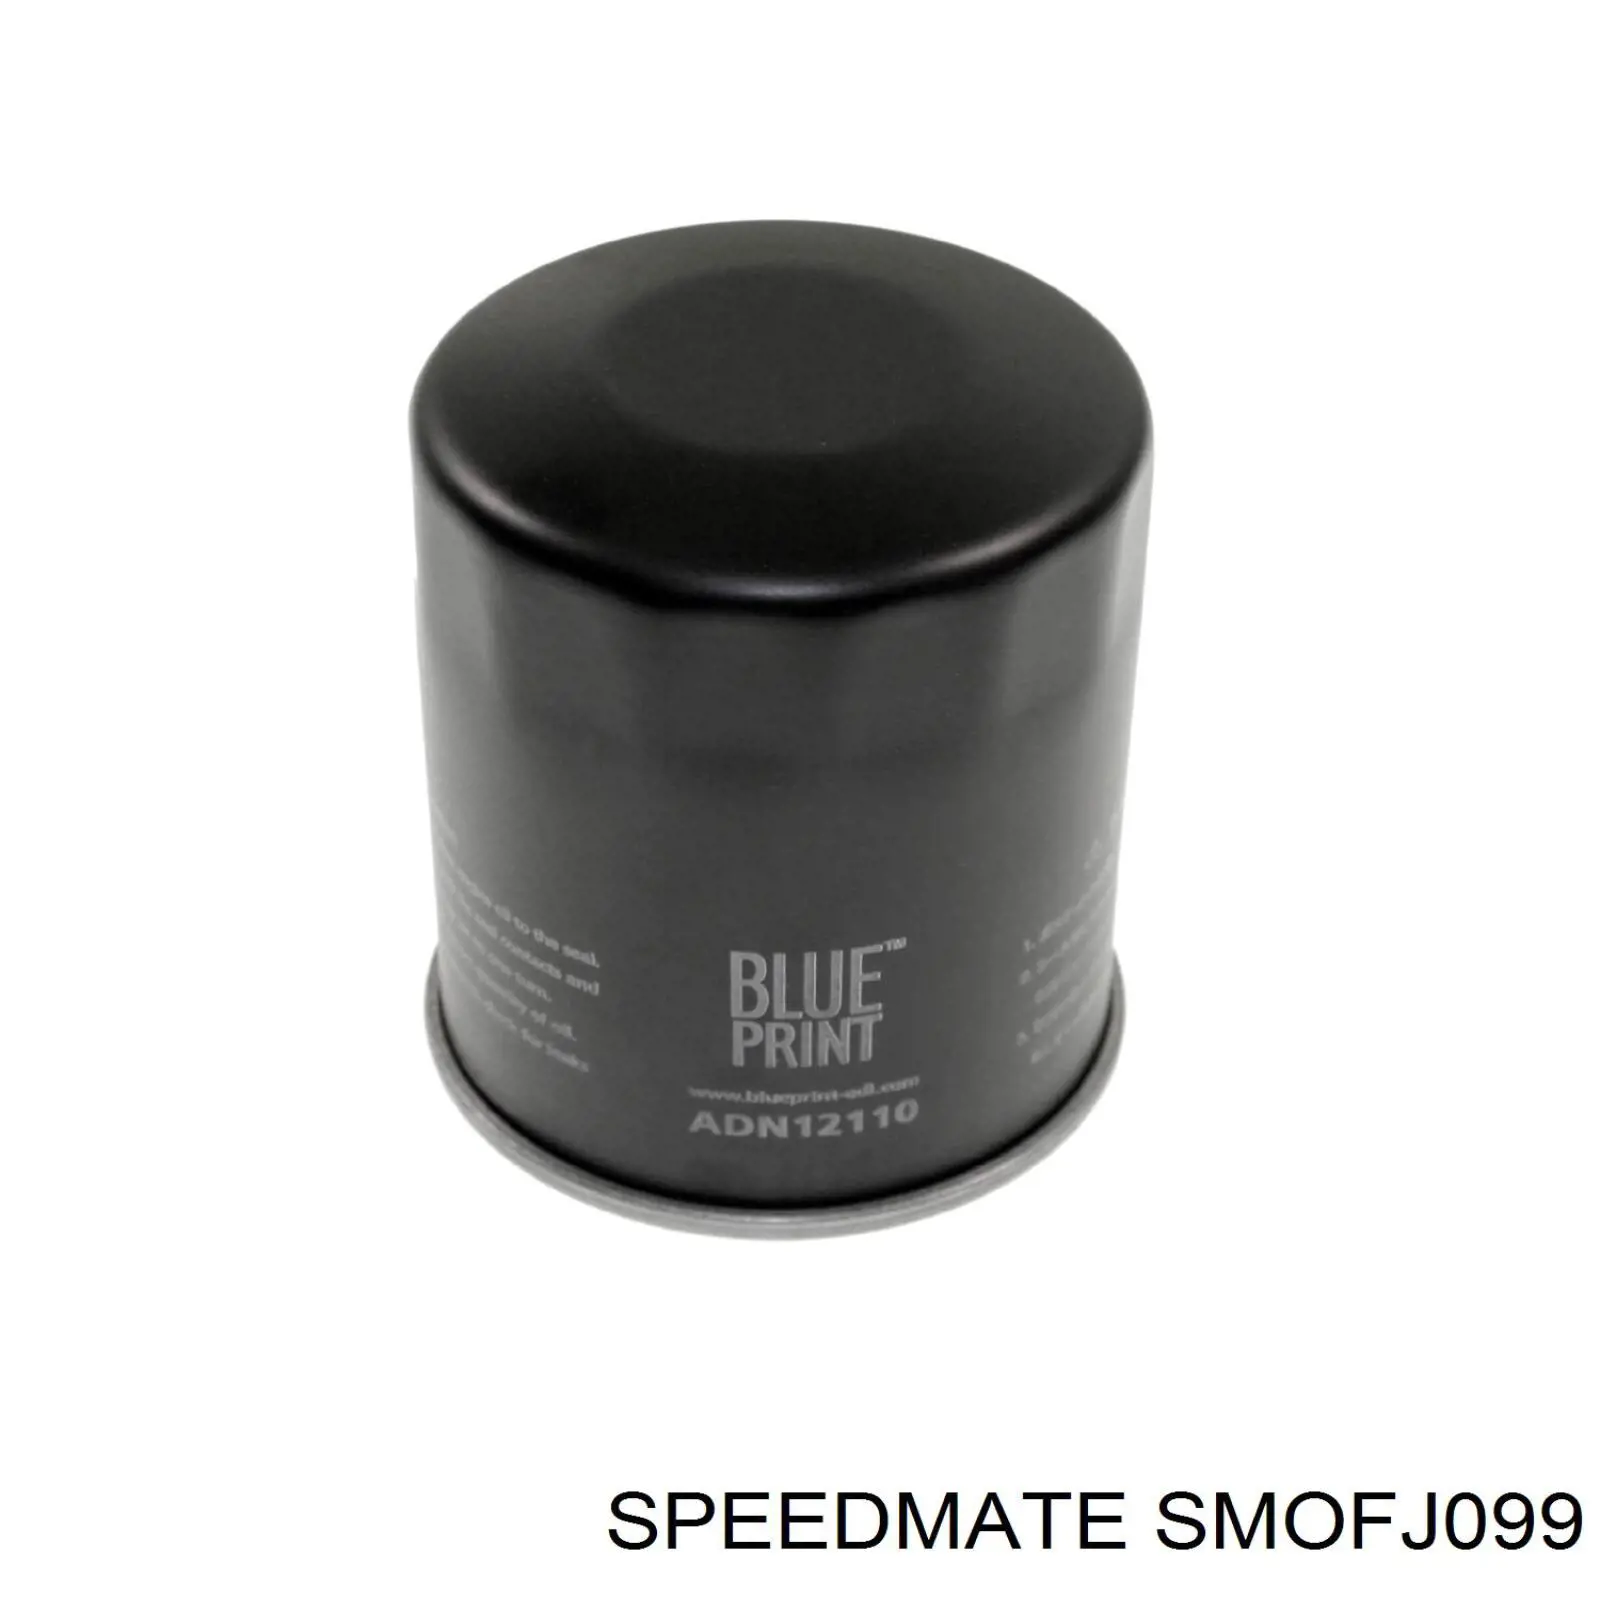 SM-OFJ099 Speedmate масляный фильтр